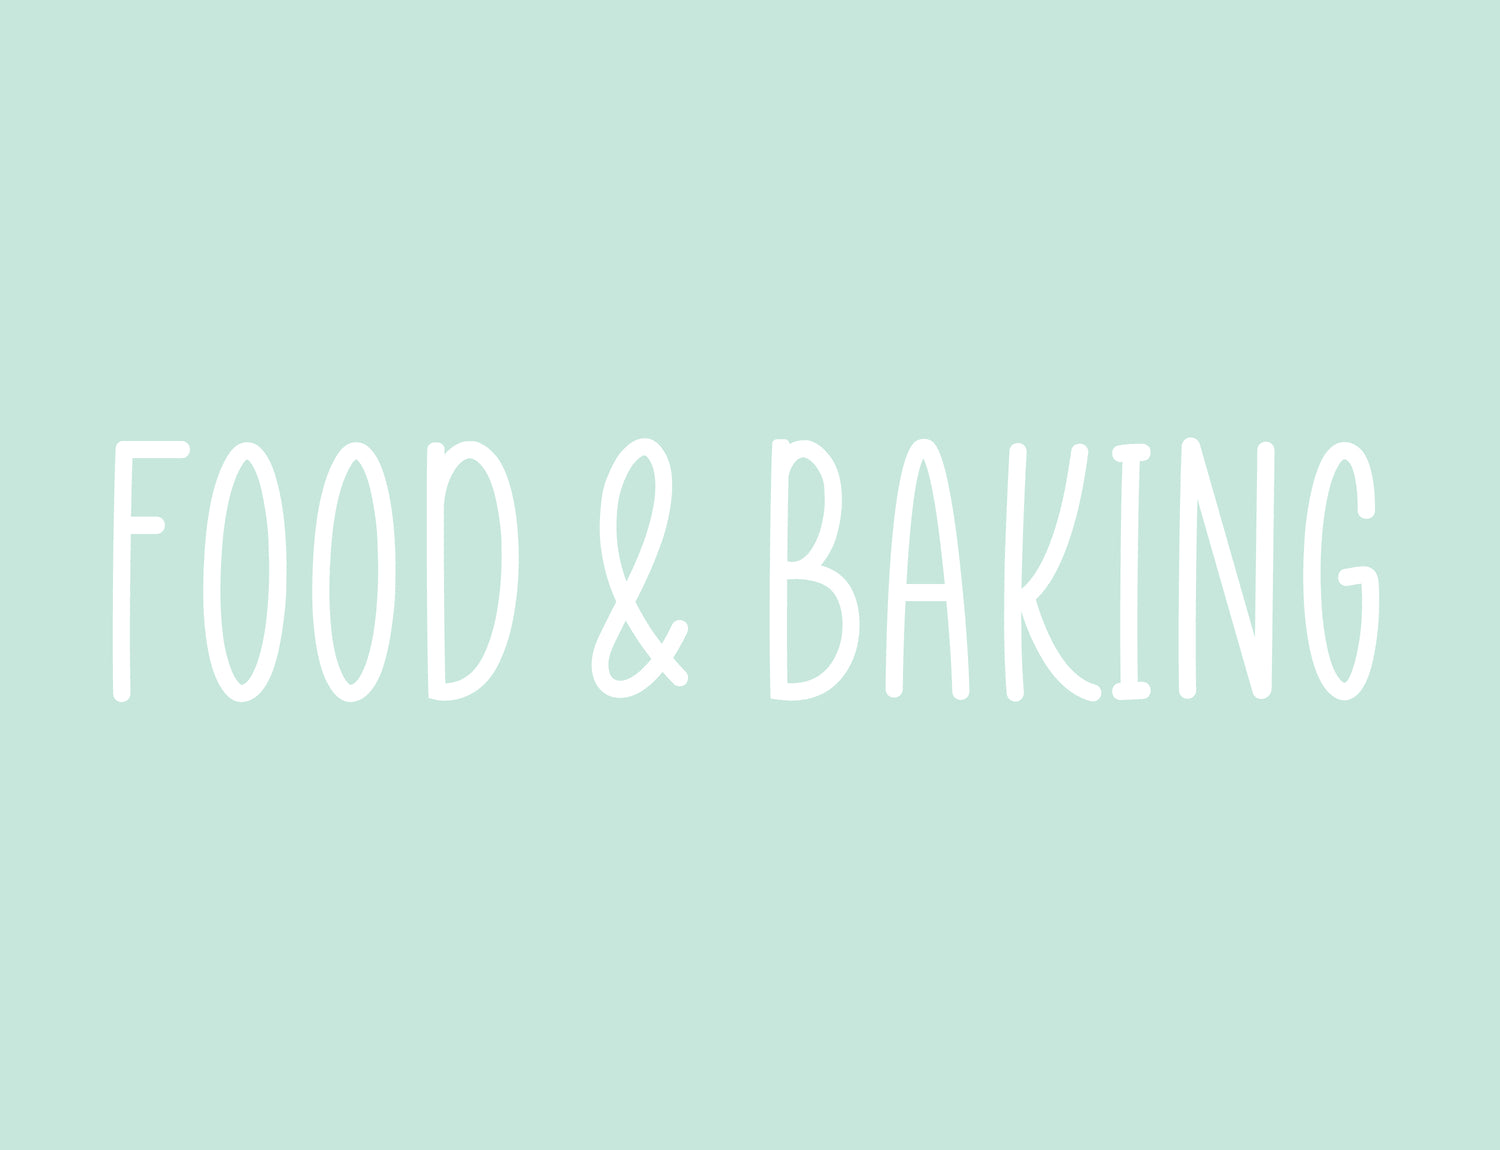 Food, Drinks & Baking